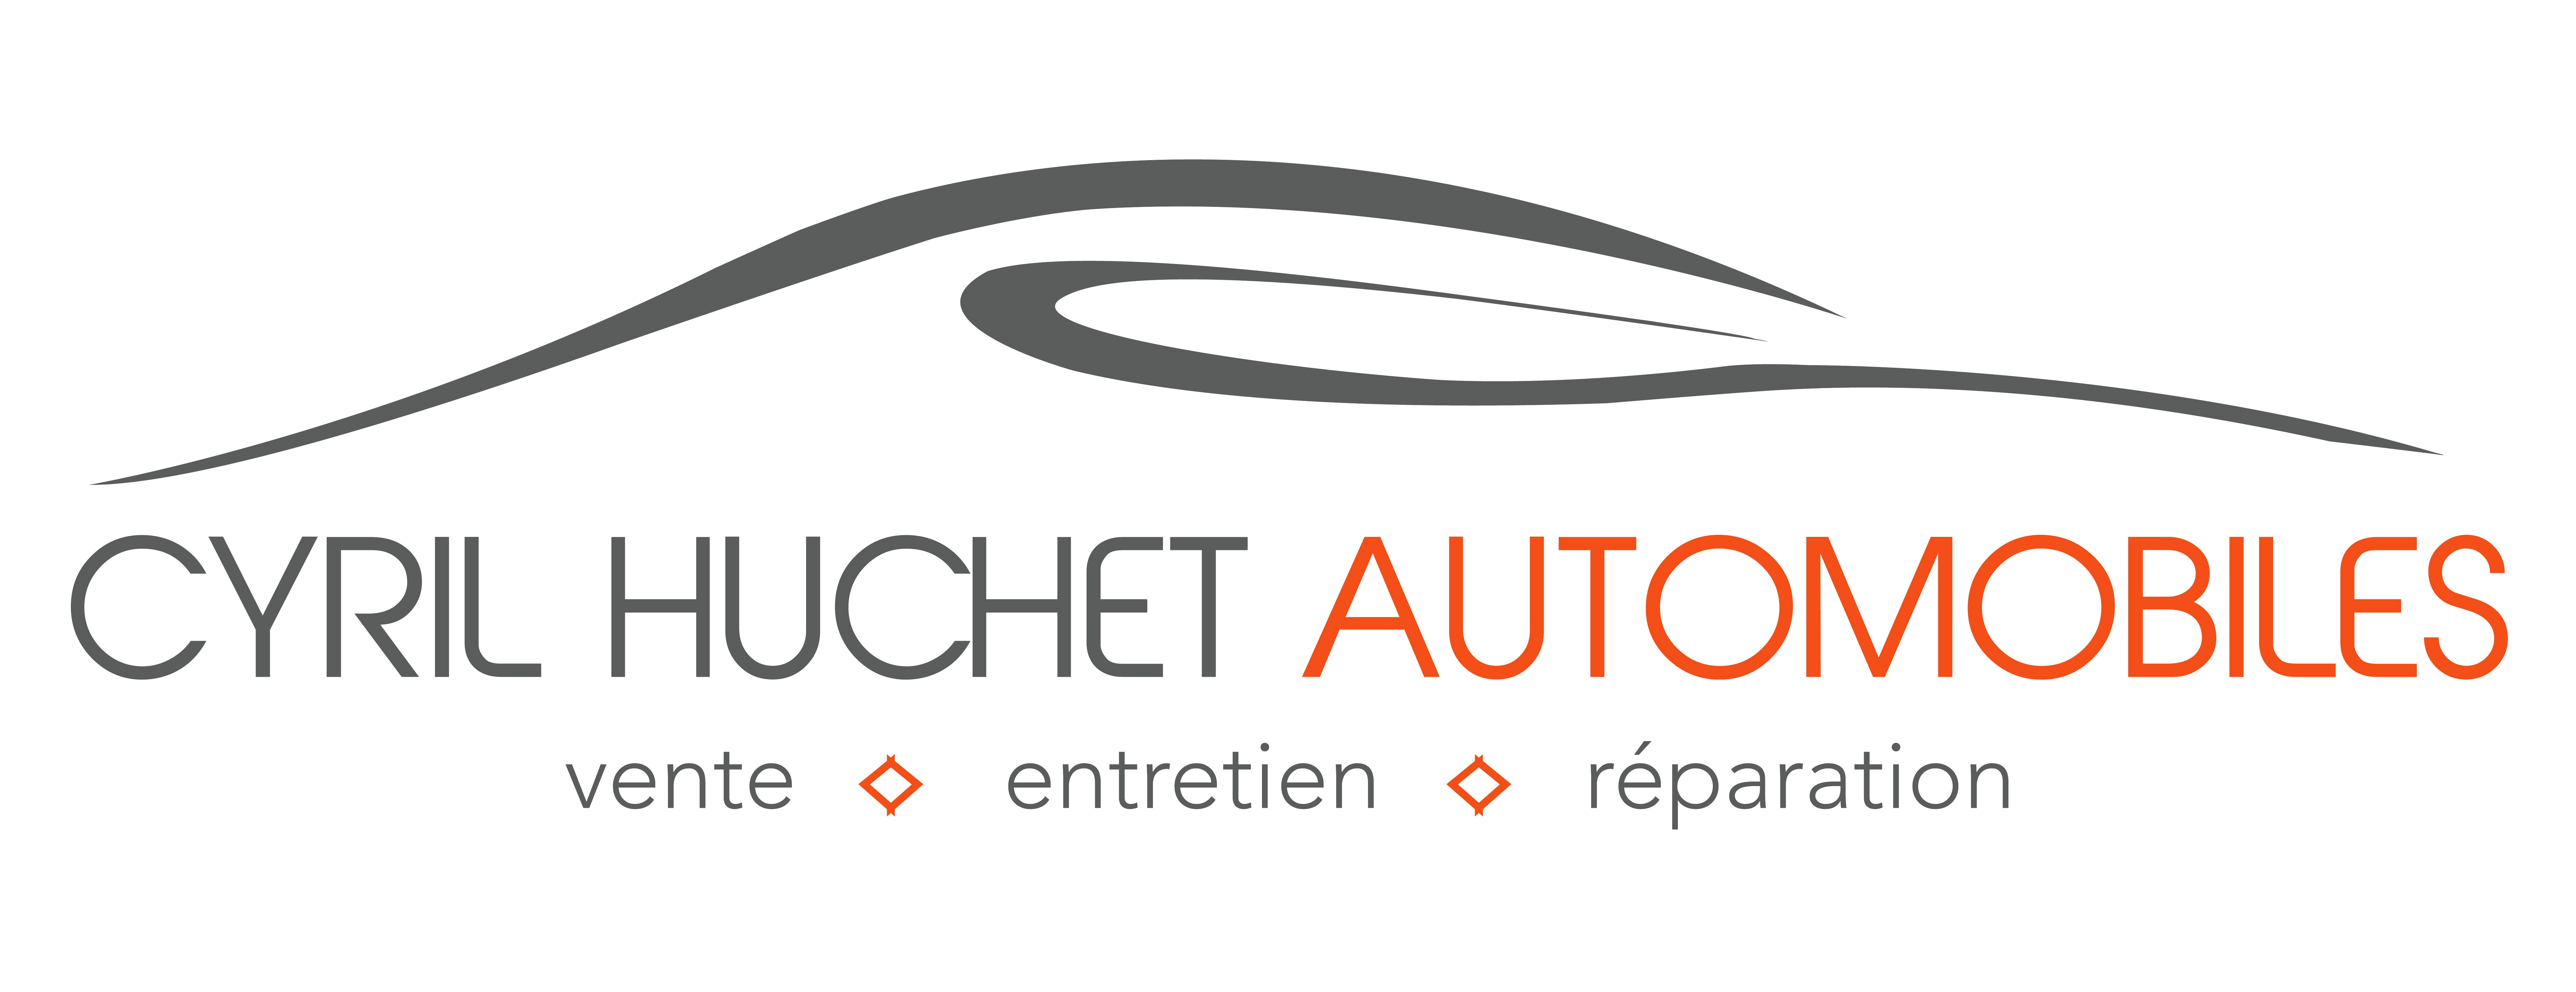 Euro Repar - Cyril Huchet Automobiles logo